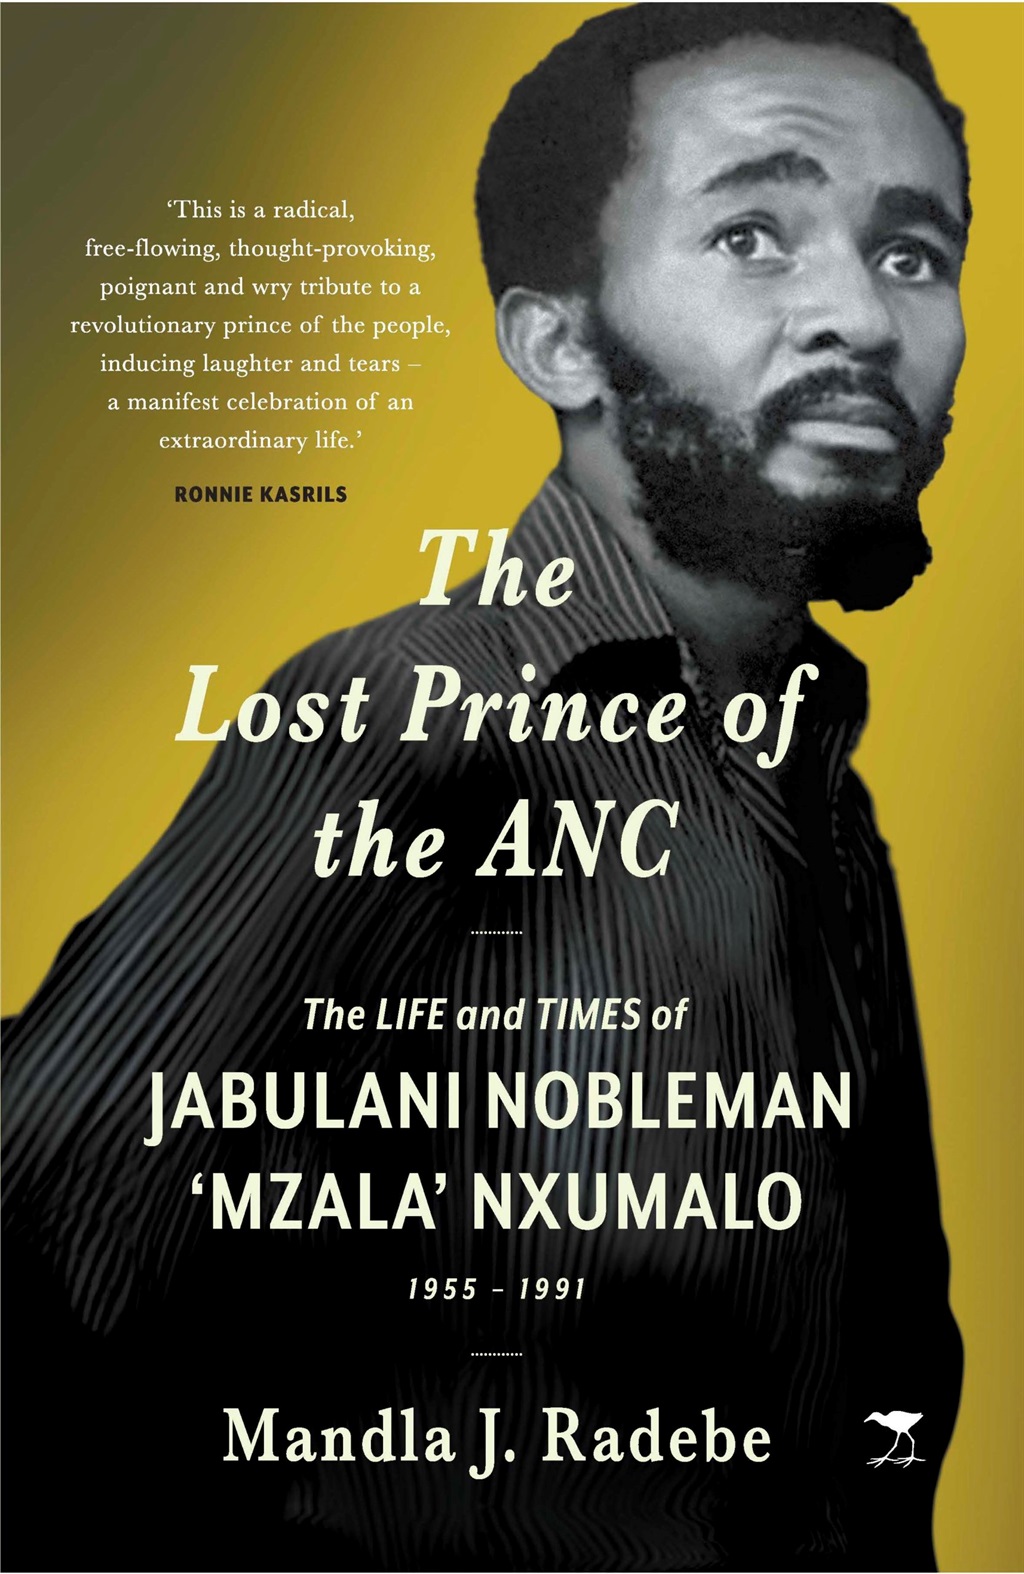 The Lost Prince of the ANC: The Life and Times of Jabulani Nobleman ‘Mzala’ Nxumalo 1955–1991 by Mandla J Radebe. (Jacana)